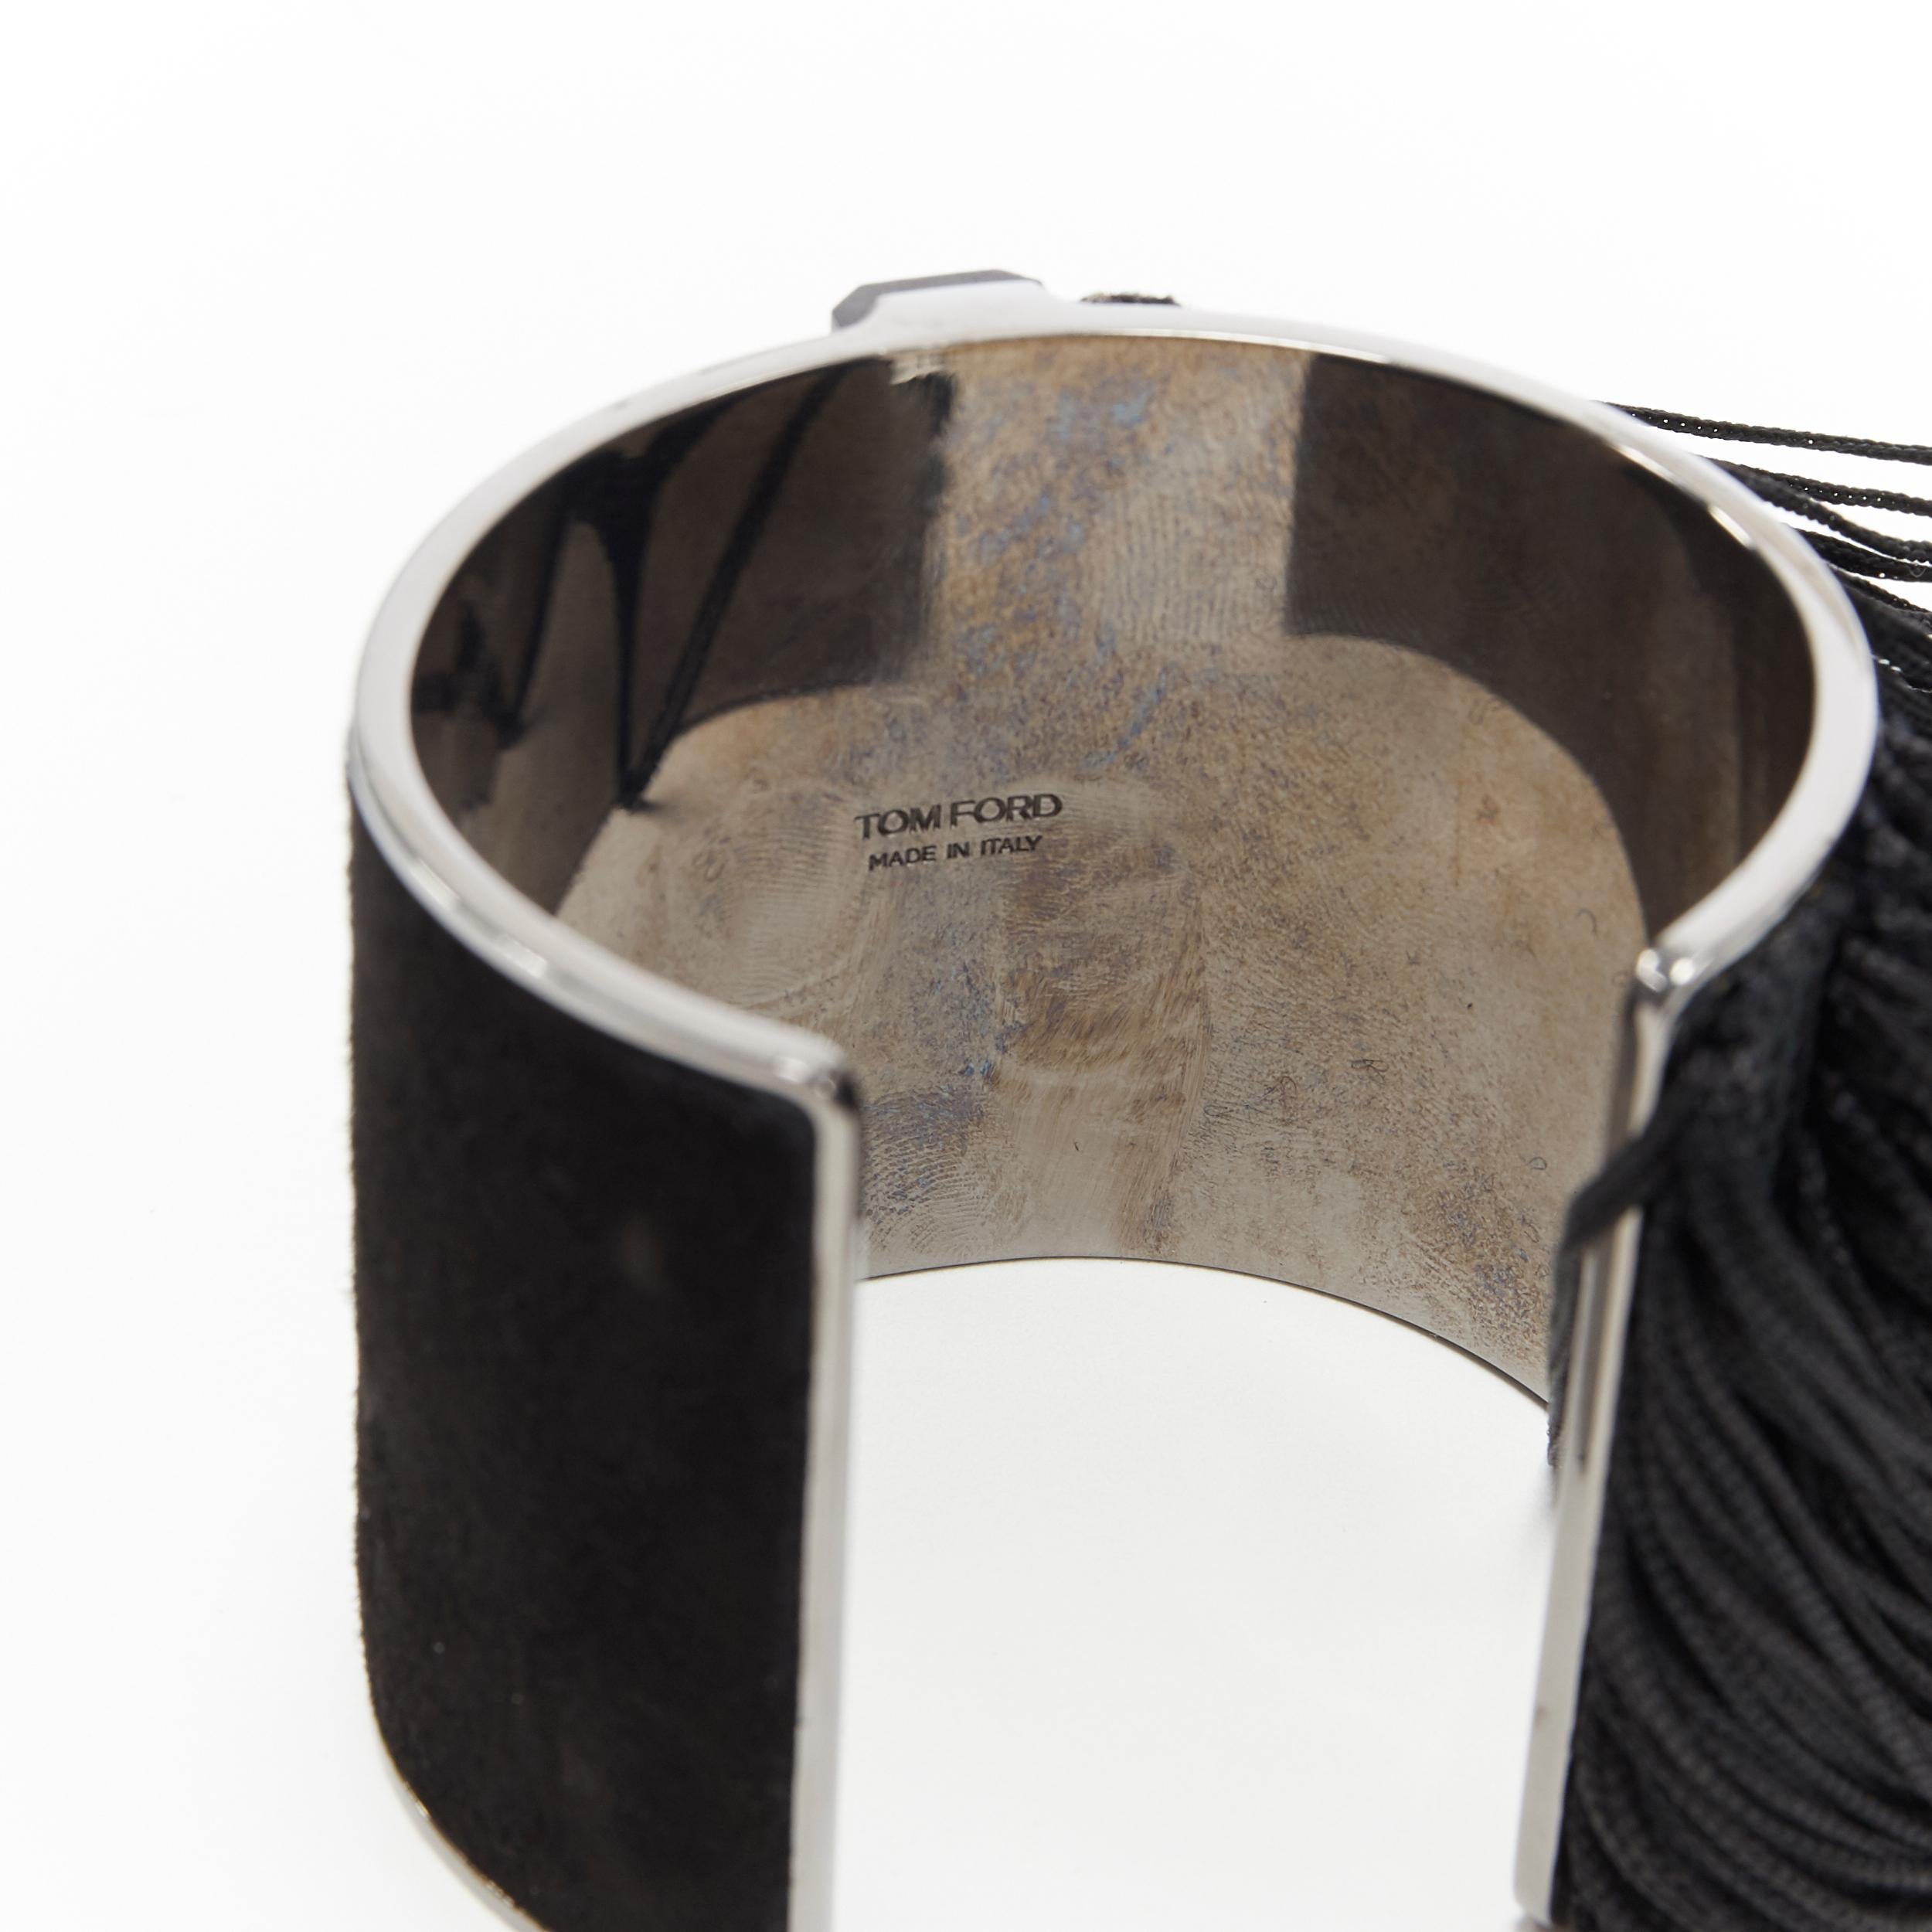 Women's TOM FORD black suede leather bead embellished long fringe bangle cuff bracelet